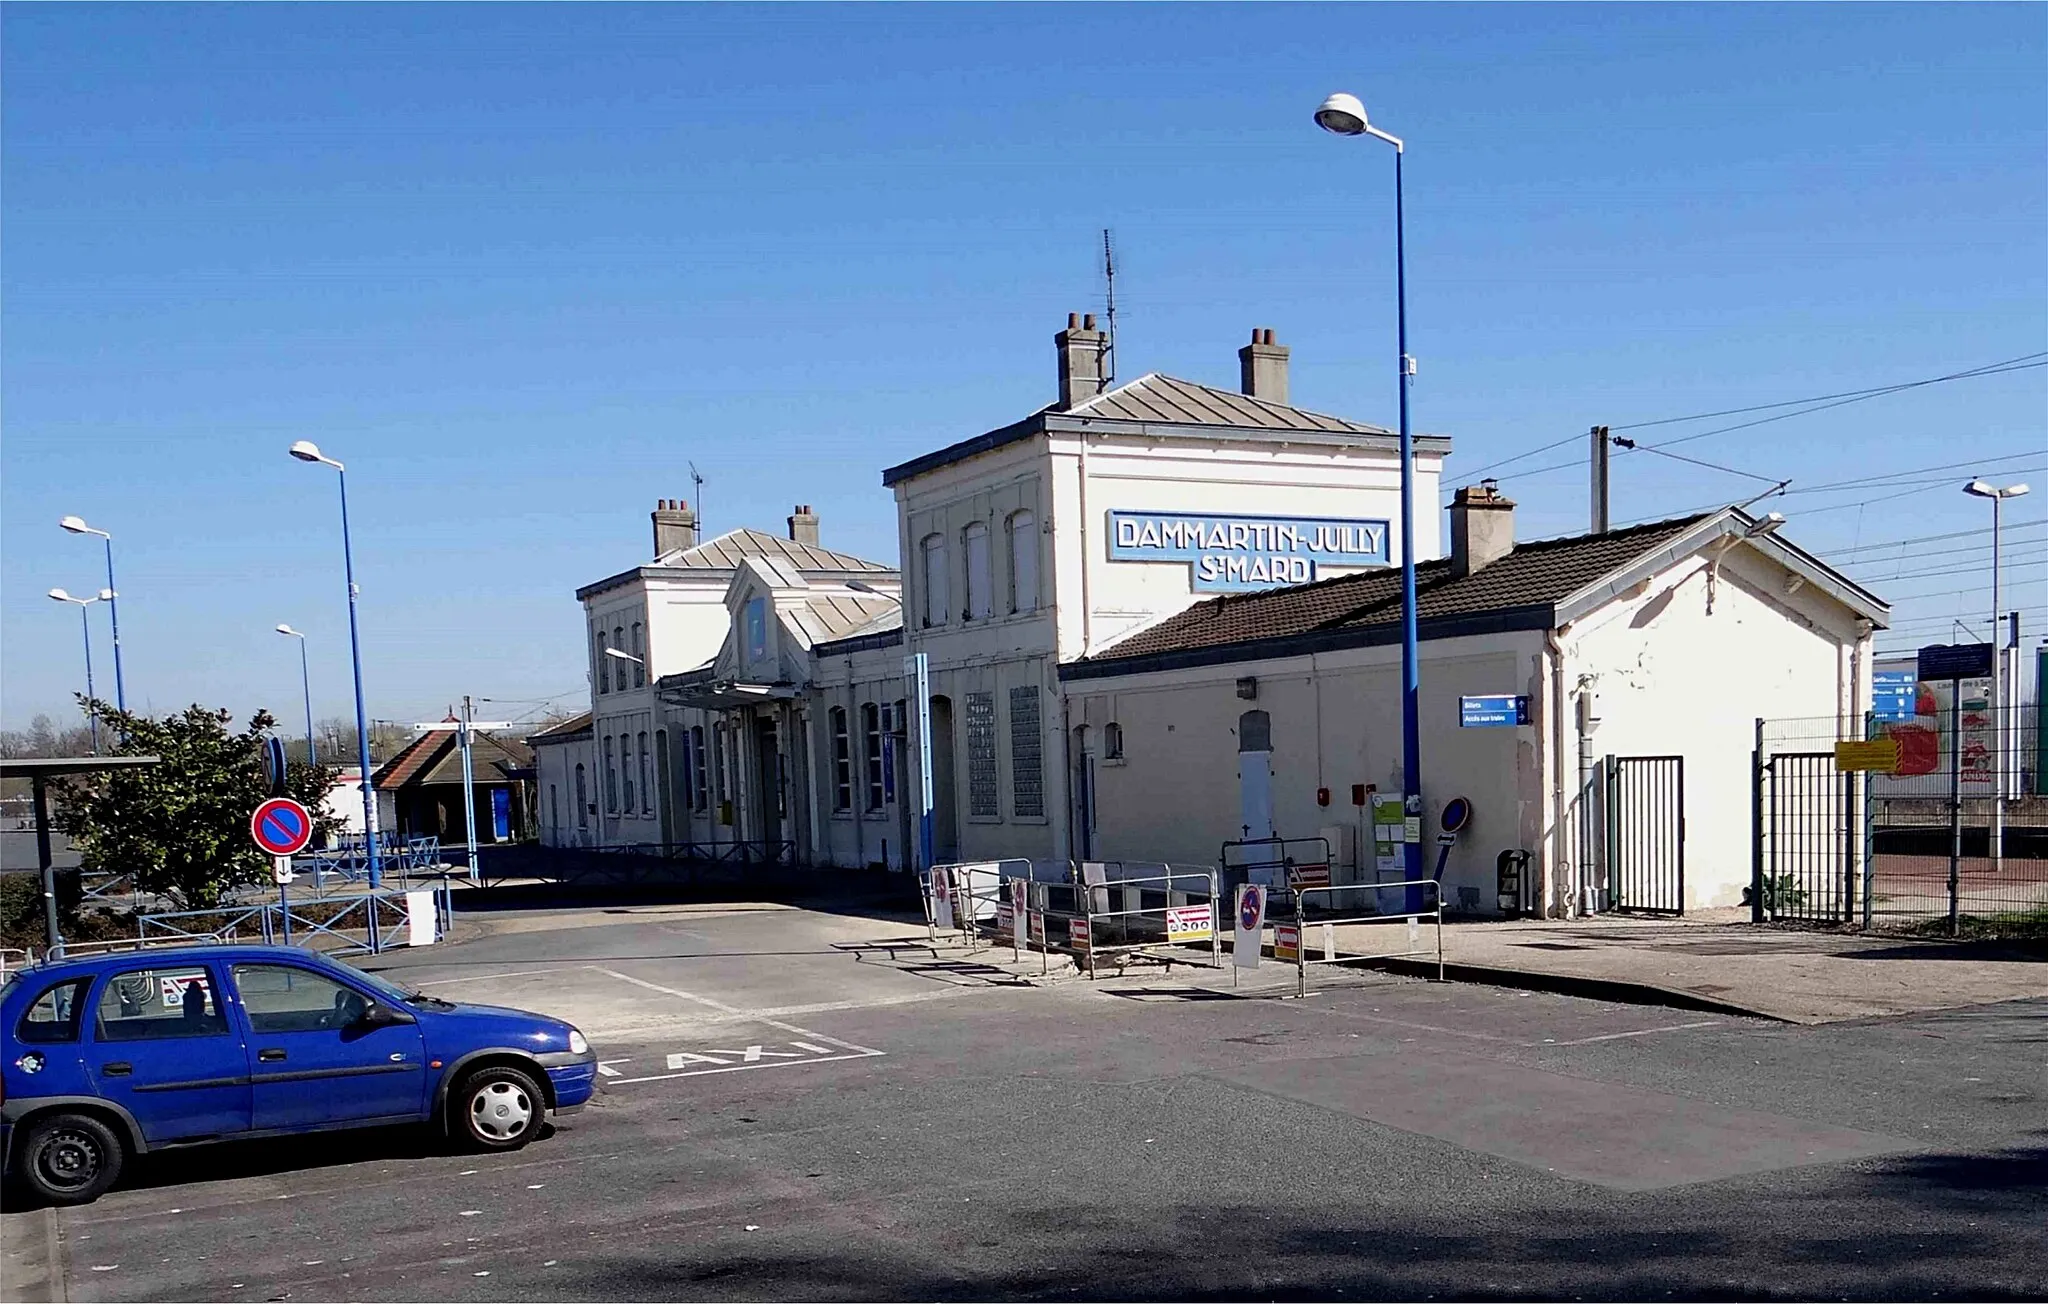 Photo showing: The train station, Saint-Mard, Seine-et-Marne, France.